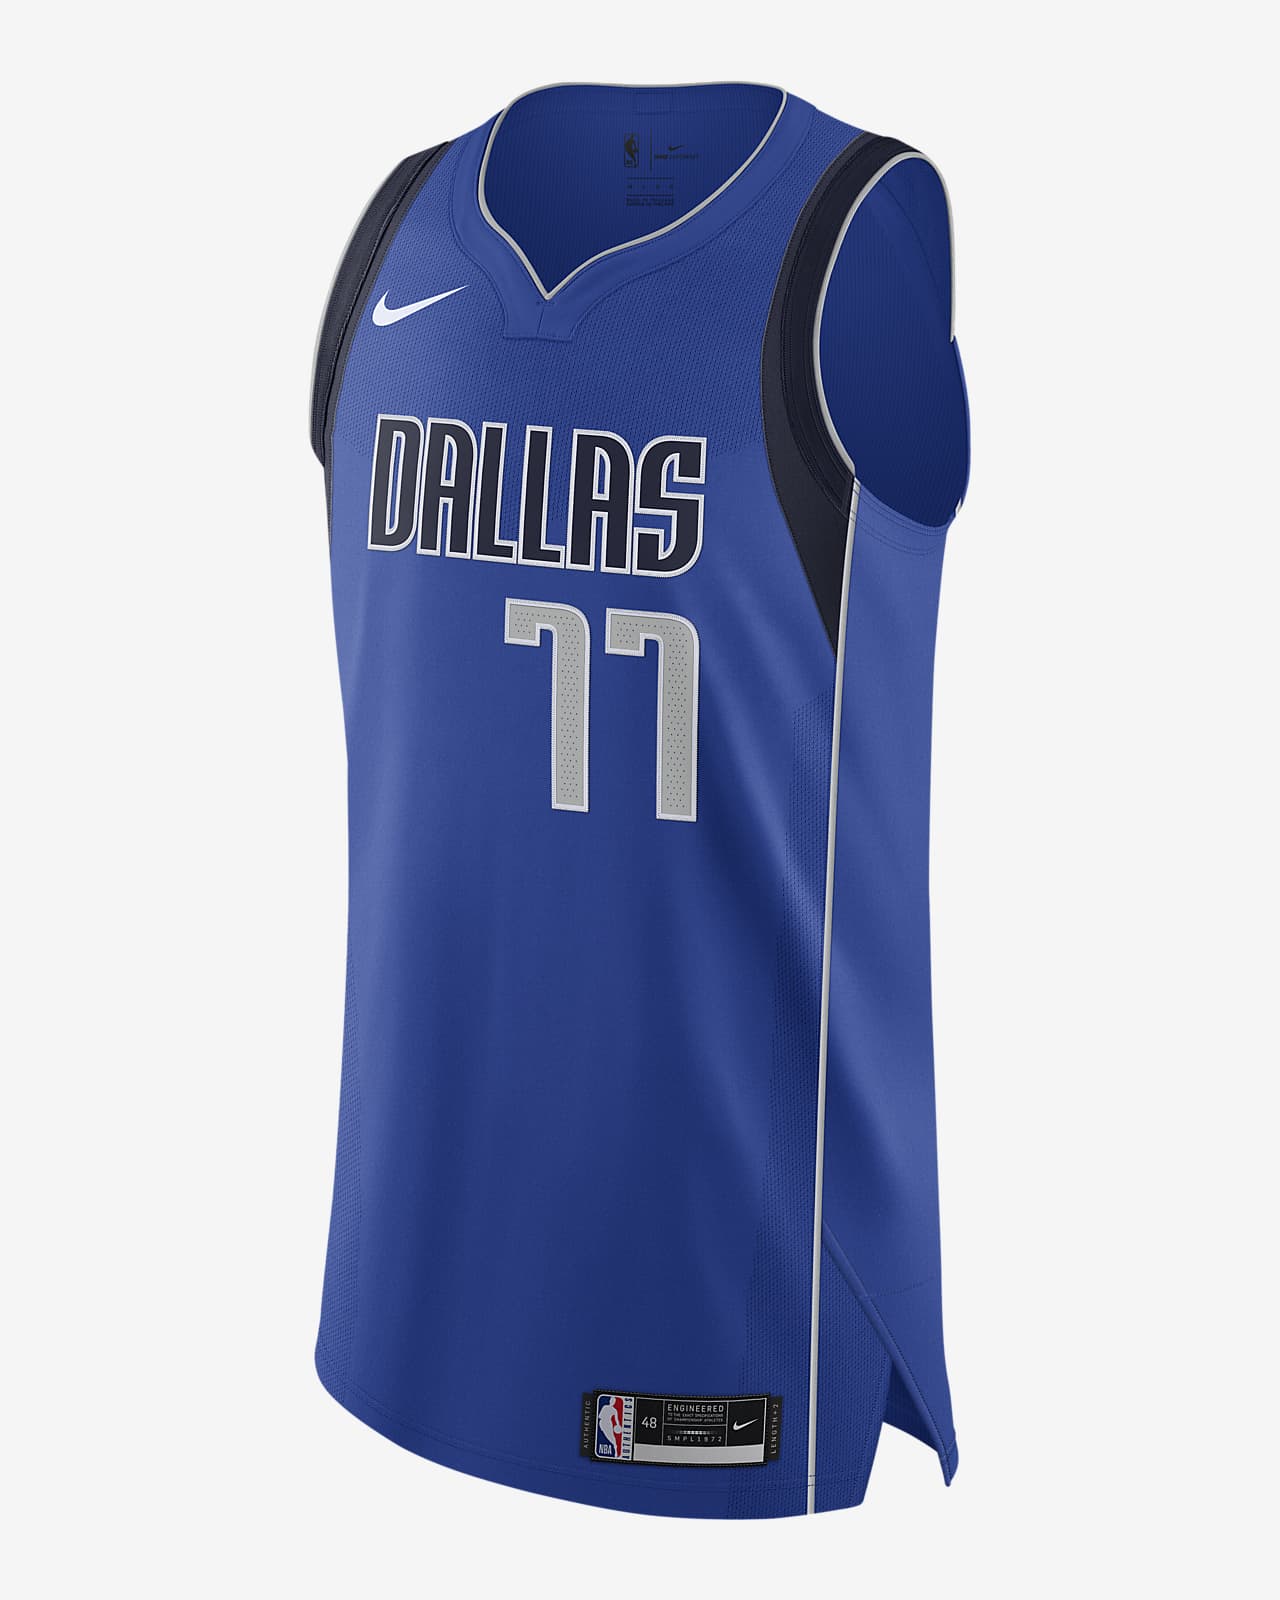 Jersey Nike de la NBA Authentic para hombre Luka Doncic Mavericks Icon Edition 2020